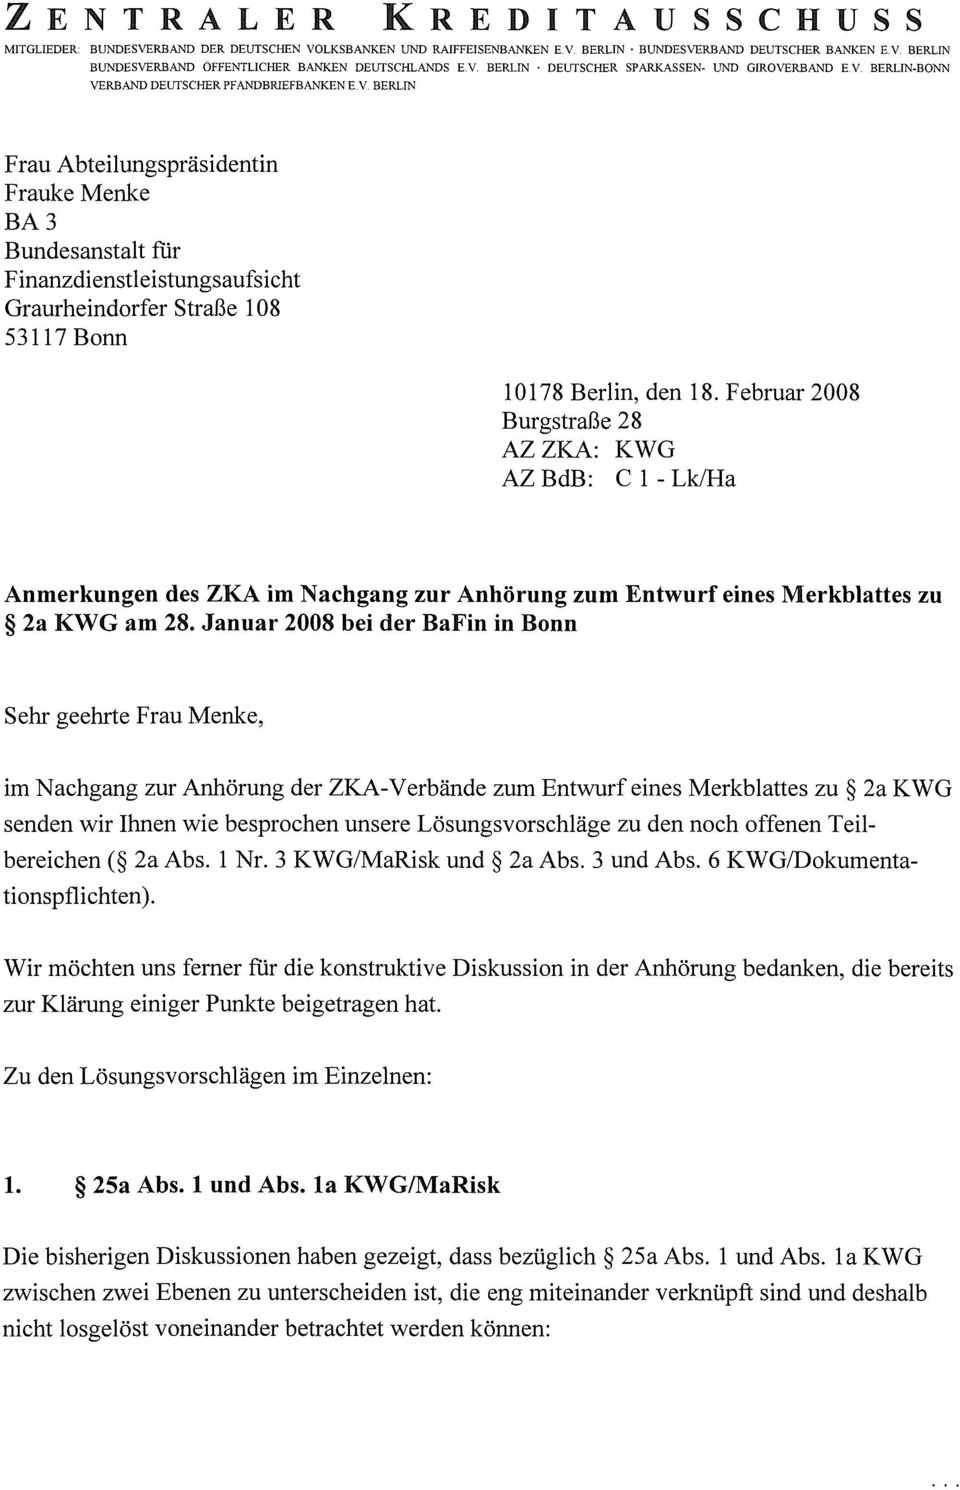 Februar 2008 Burgstraße 28 AZZKA: KWG AZBdB: Cl-Lk/Ha Anmerkungen des ZKA im Nachgang zur Anhörung zum Entwurf eines Merkblattes zu 2a KWG am 28.